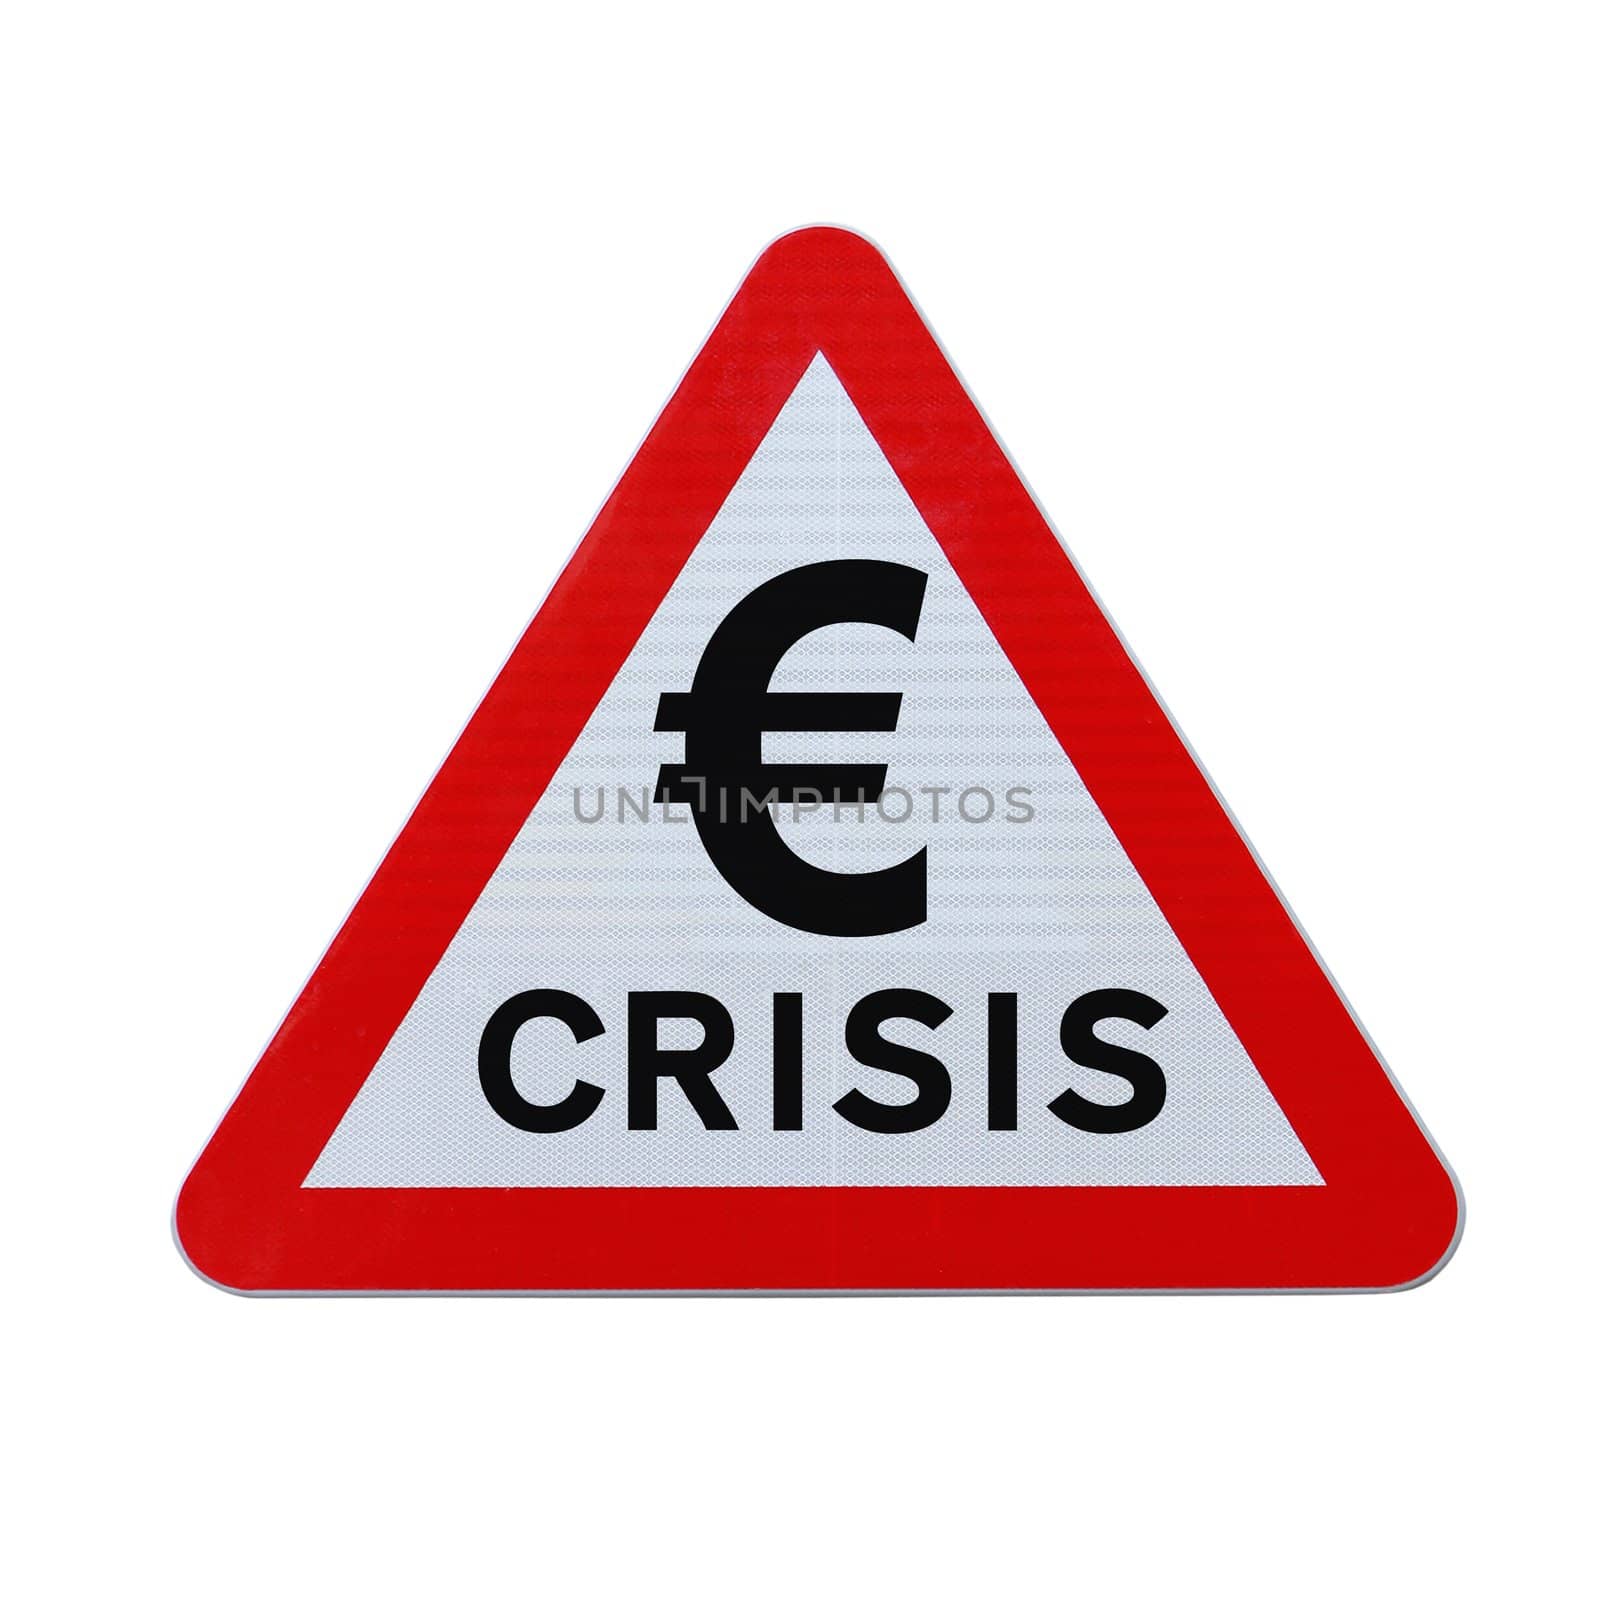 Euro Crisis by rnl